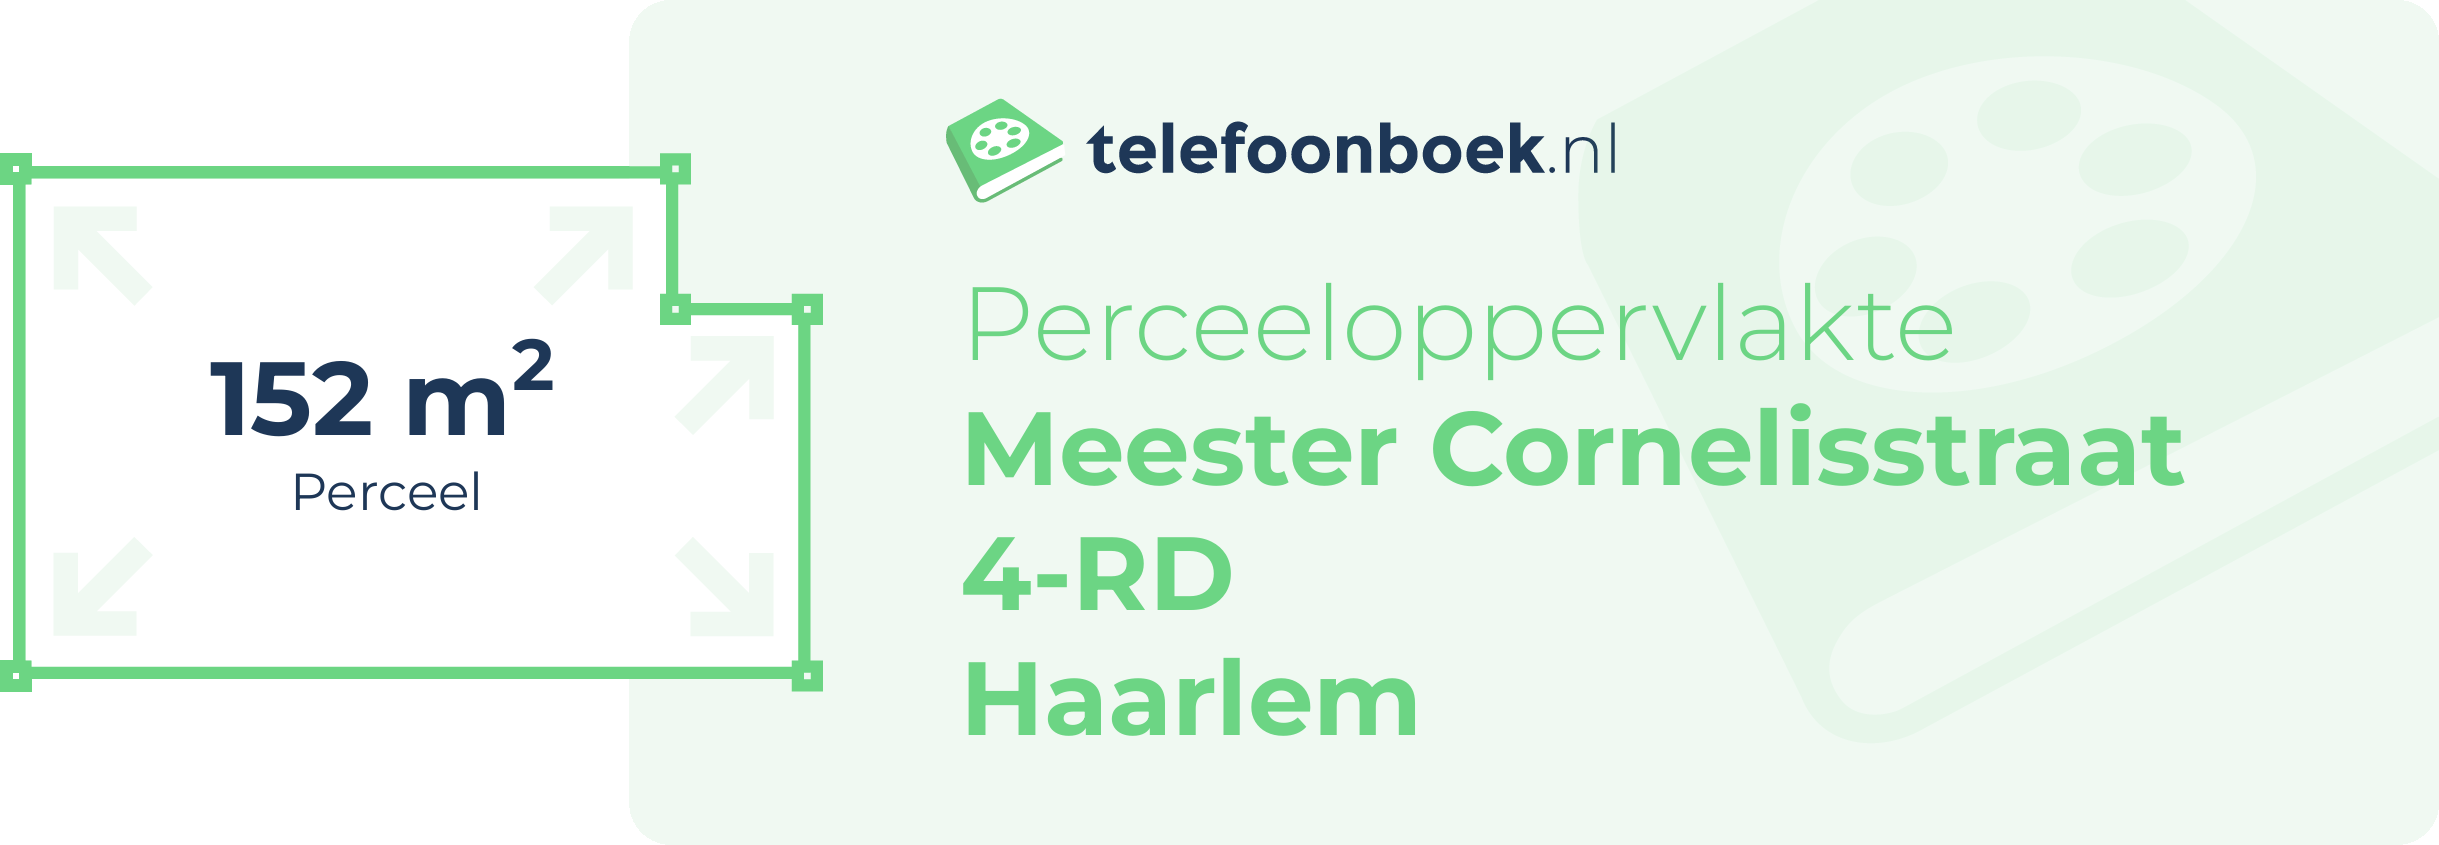 Perceeloppervlakte Meester Cornelisstraat 4-RD Haarlem